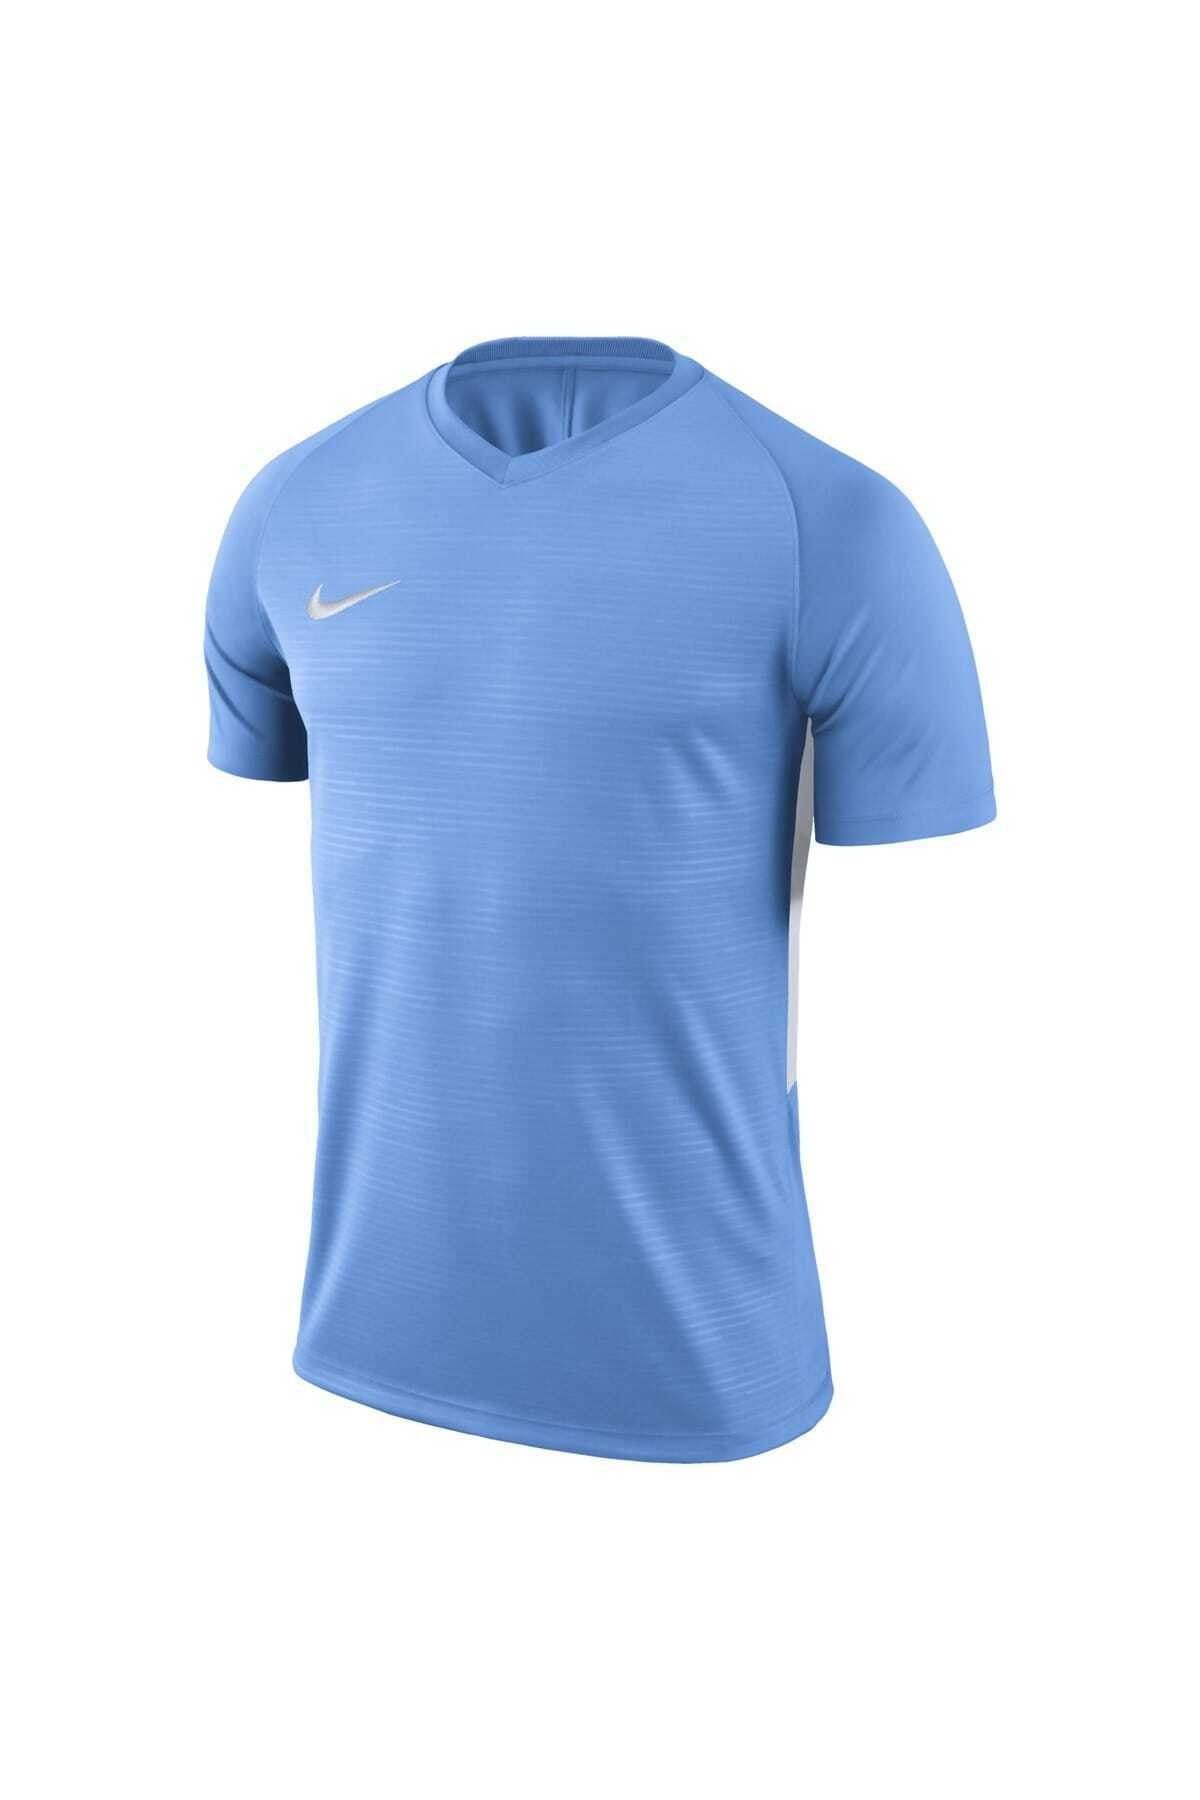 Nike Erkek T-shirt - Dry Tiempo Prem. - 894230-412